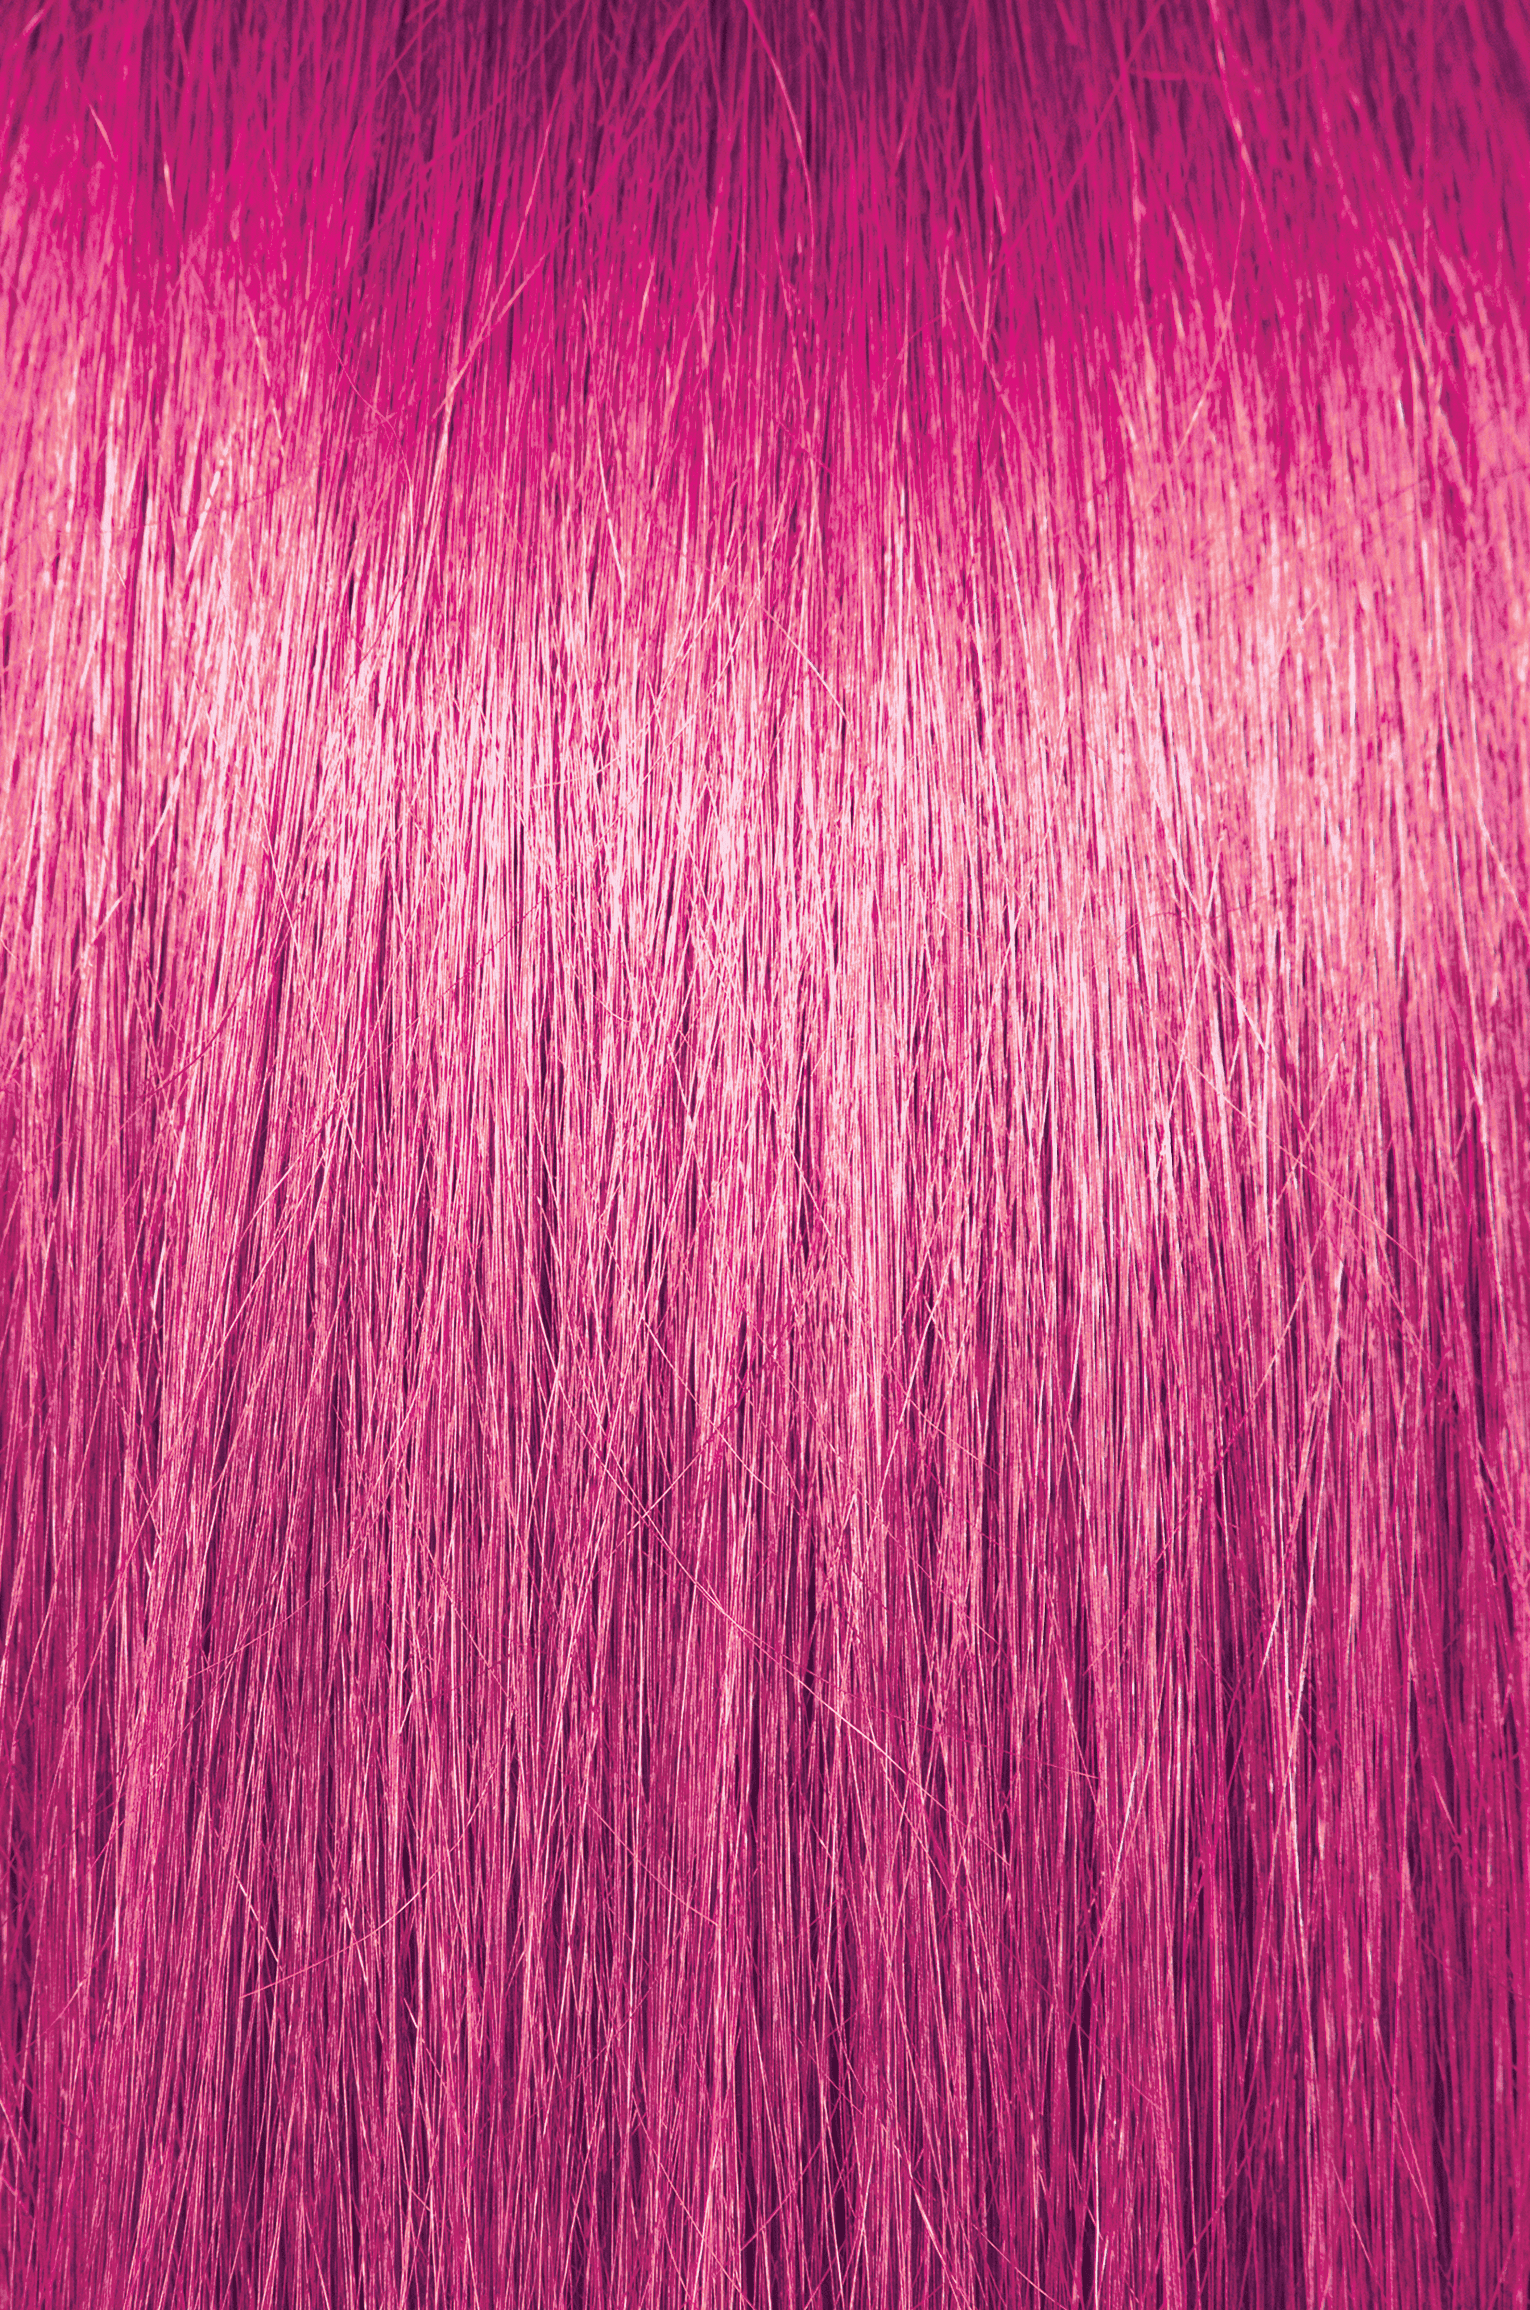 Pravana Neon Pink 90ml